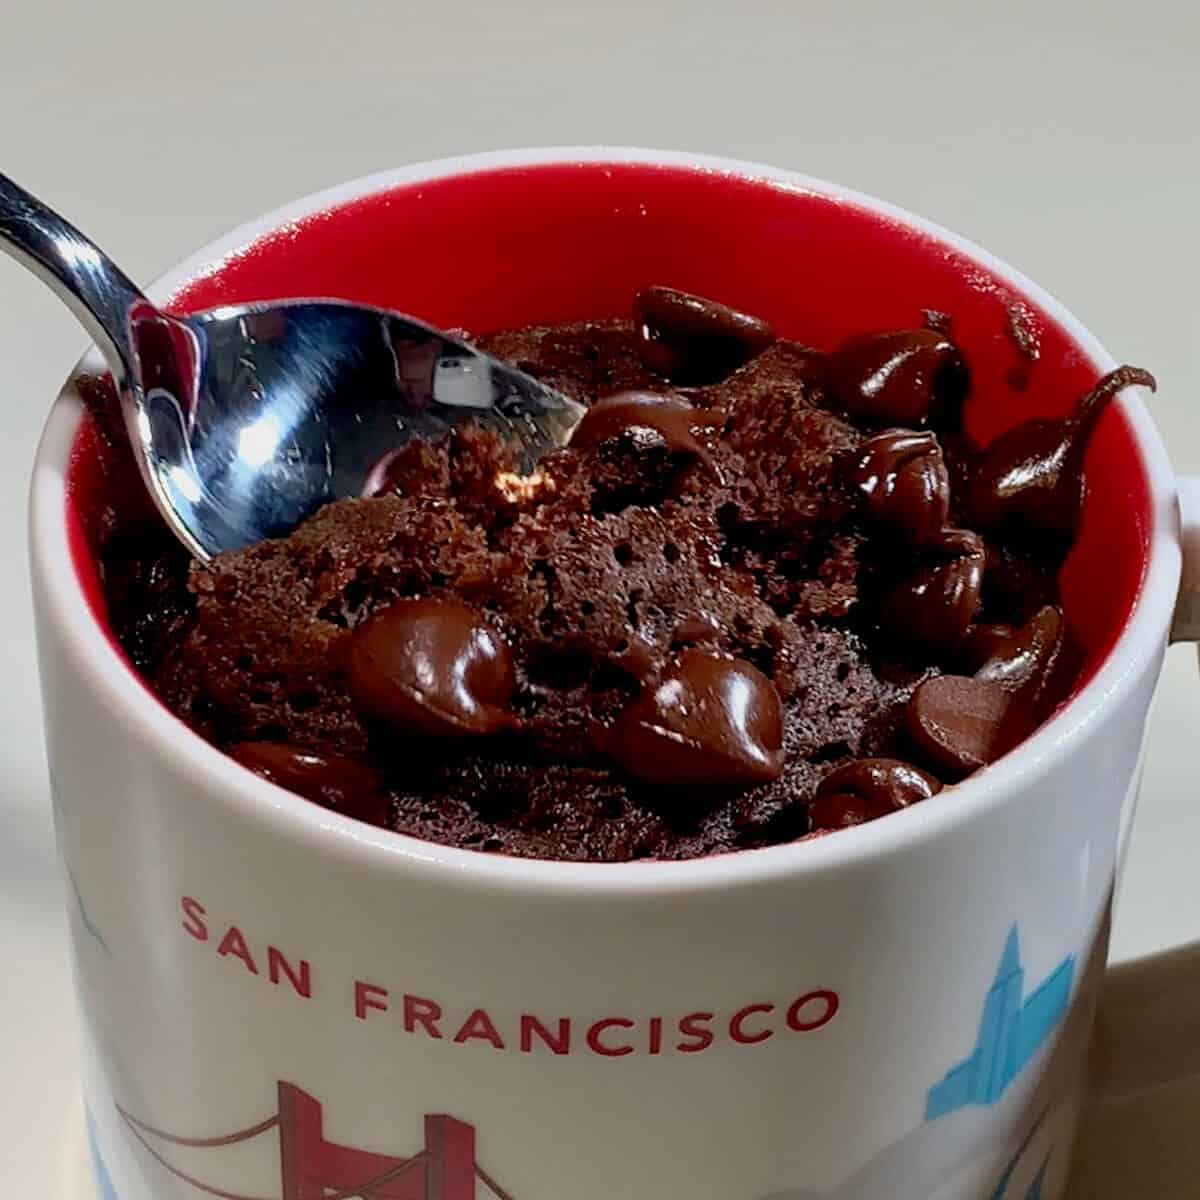 Microwave chocolate self-saucing pudding